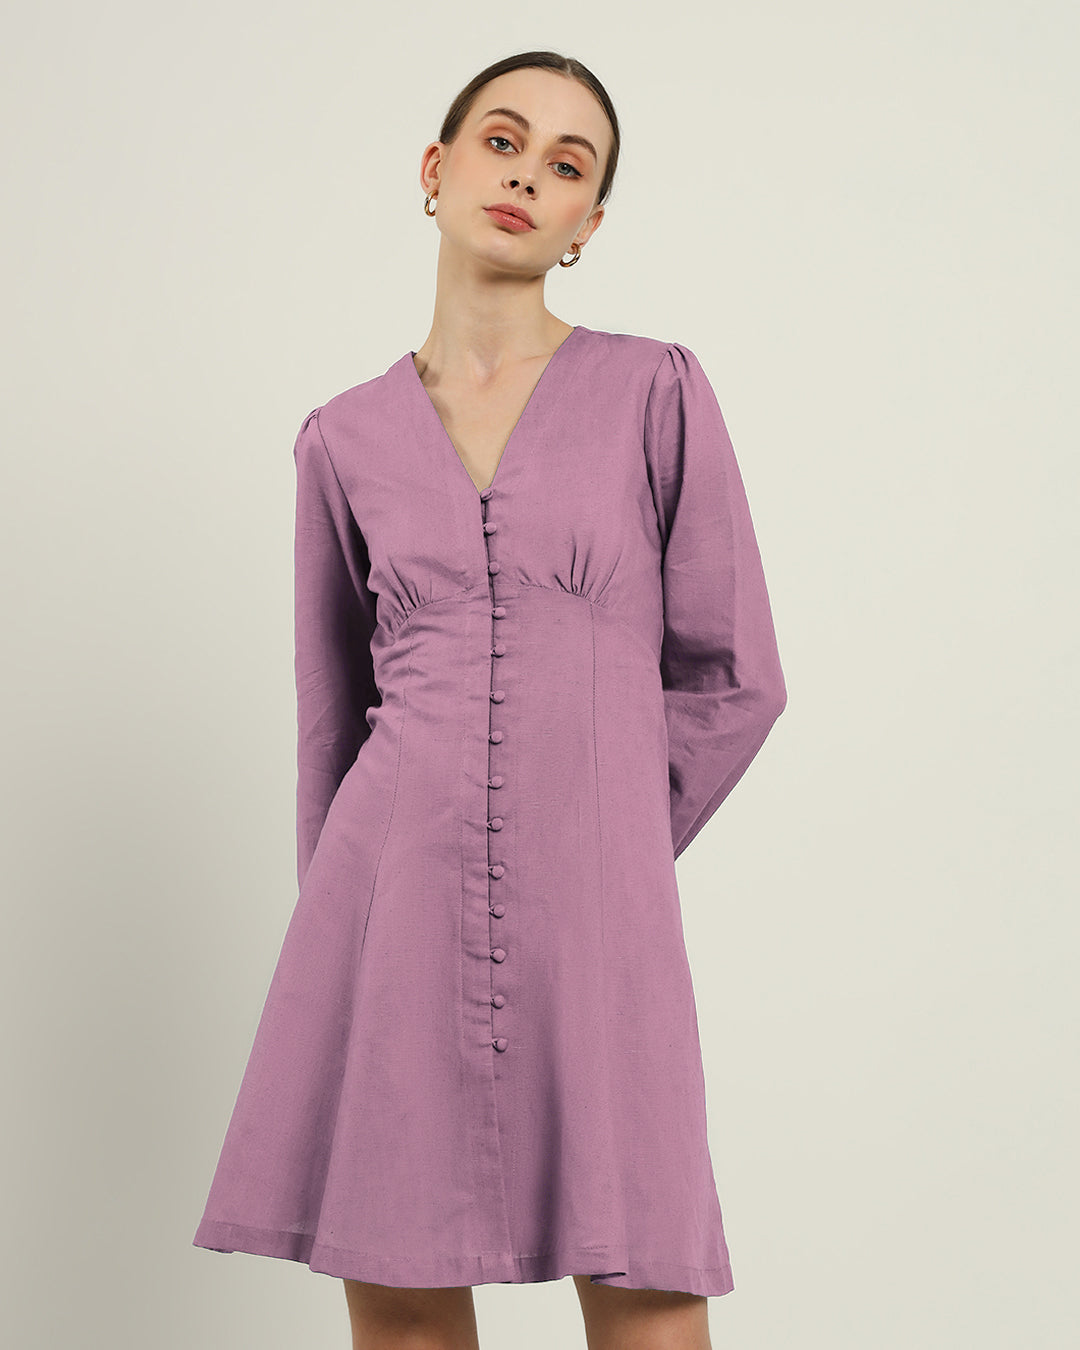 The Dafni Purple Swirl Dress